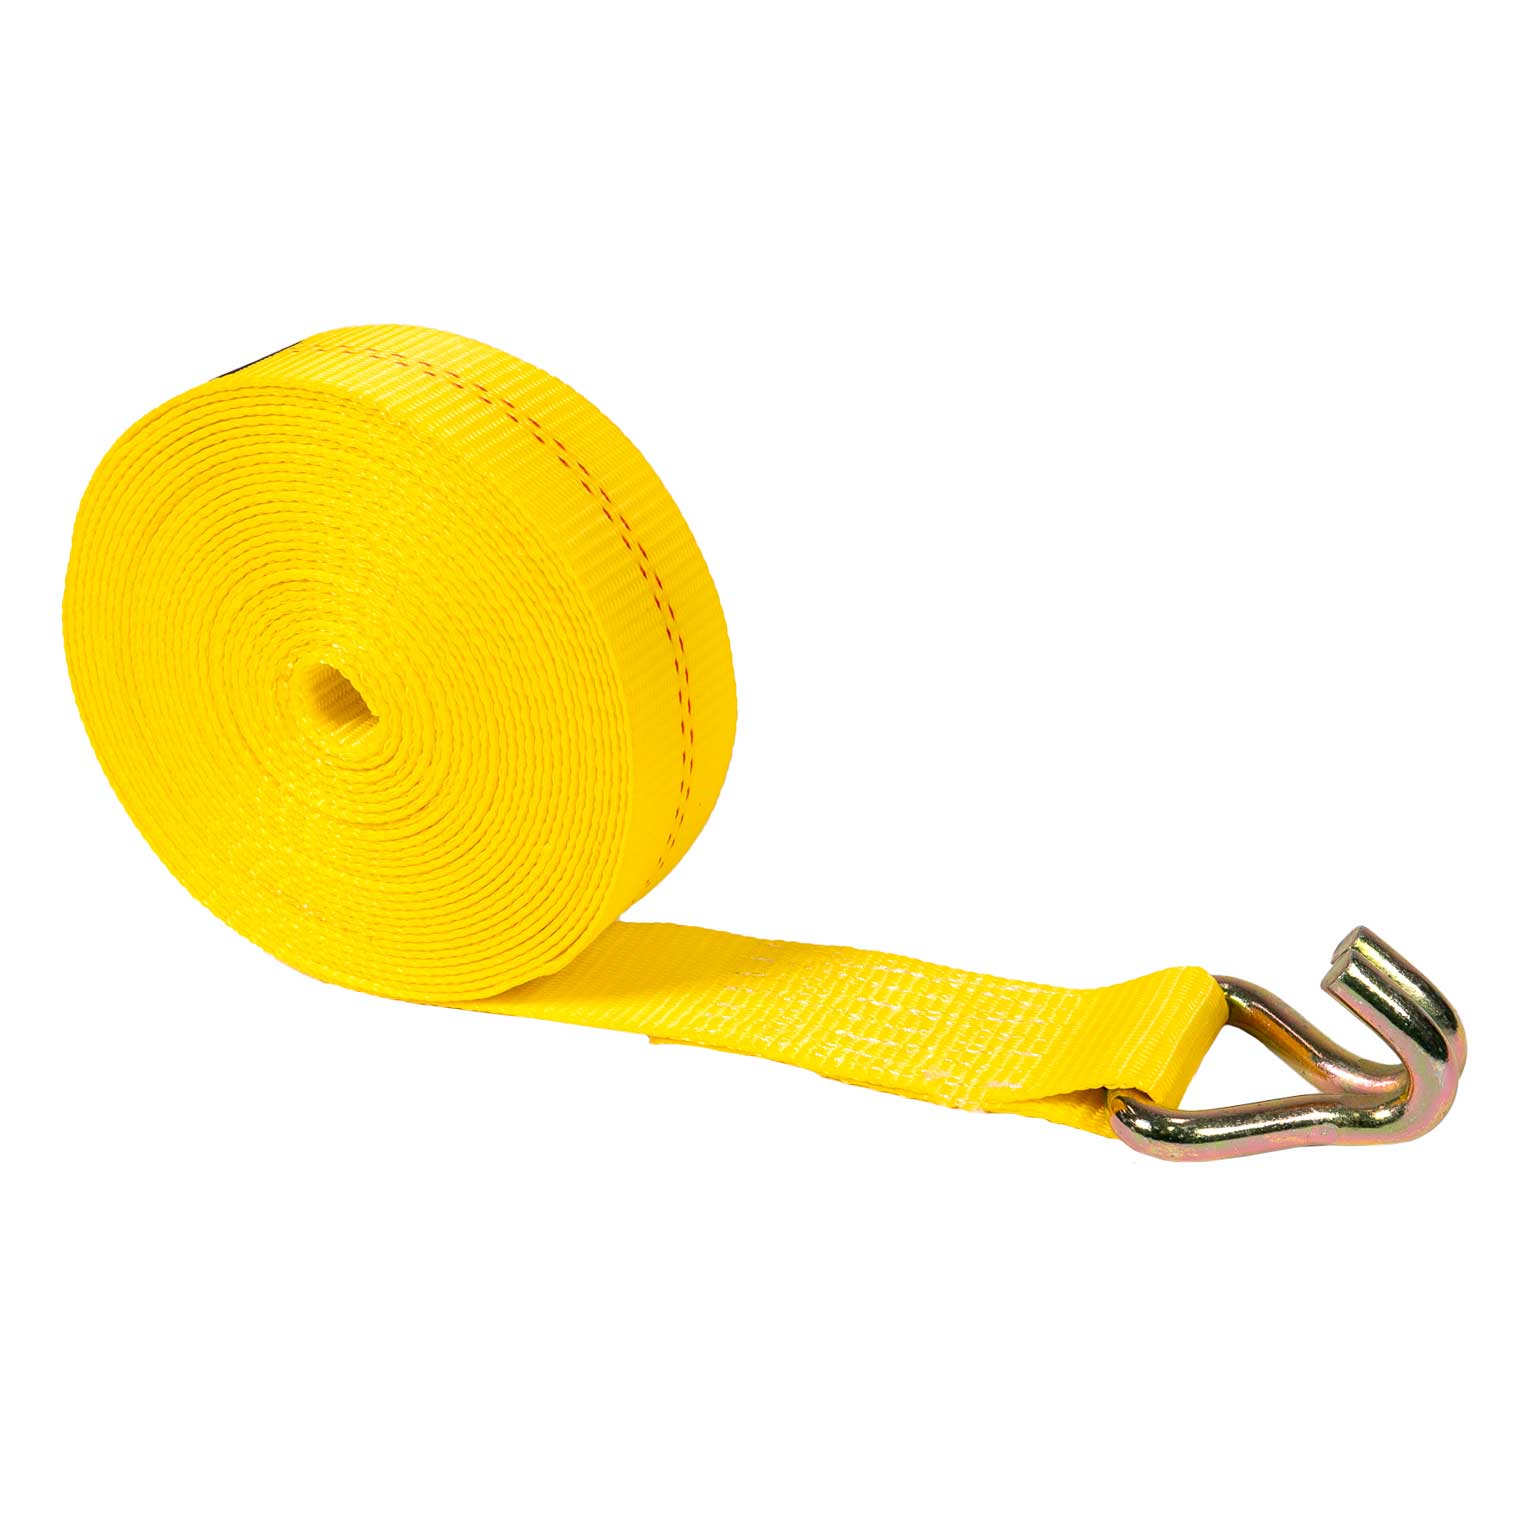 20' winch strap -  2" yellow wire hook winch strap